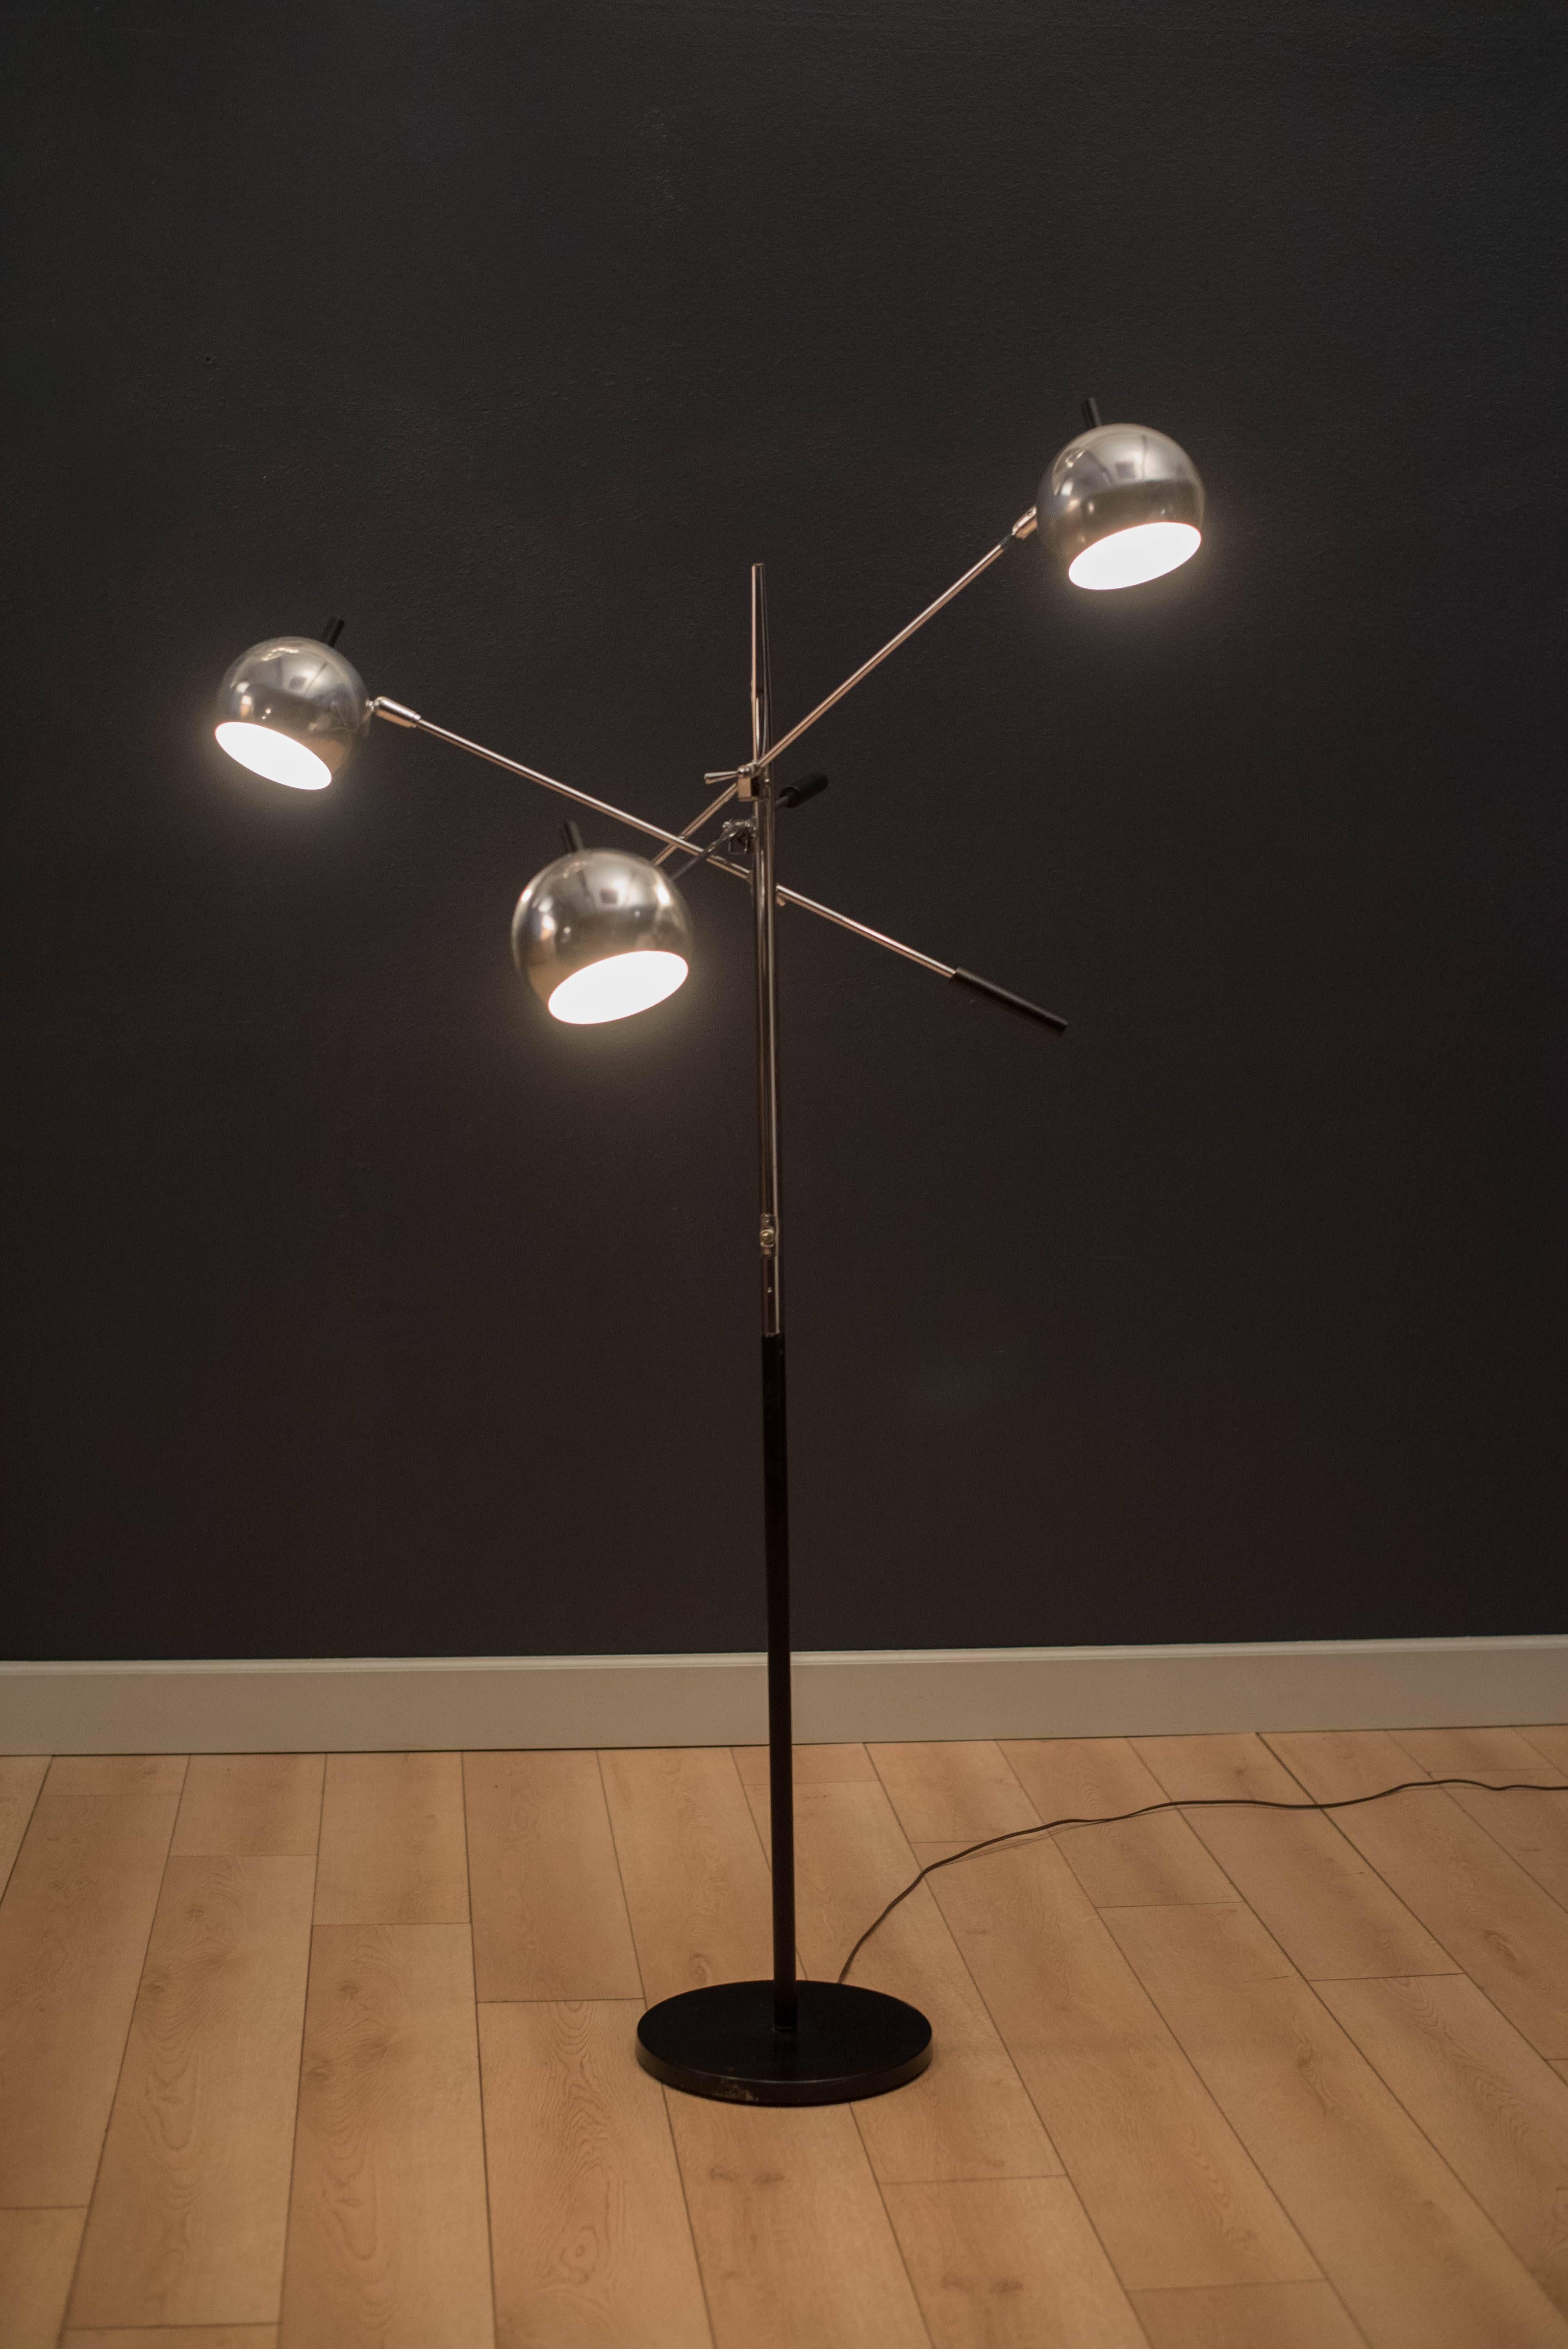 Mid-Century Modern Triennale floor lamp designed by Robert Sonneman. This versatile piece features three adjustable chrome globe lights that pivot on balancing lever arms.